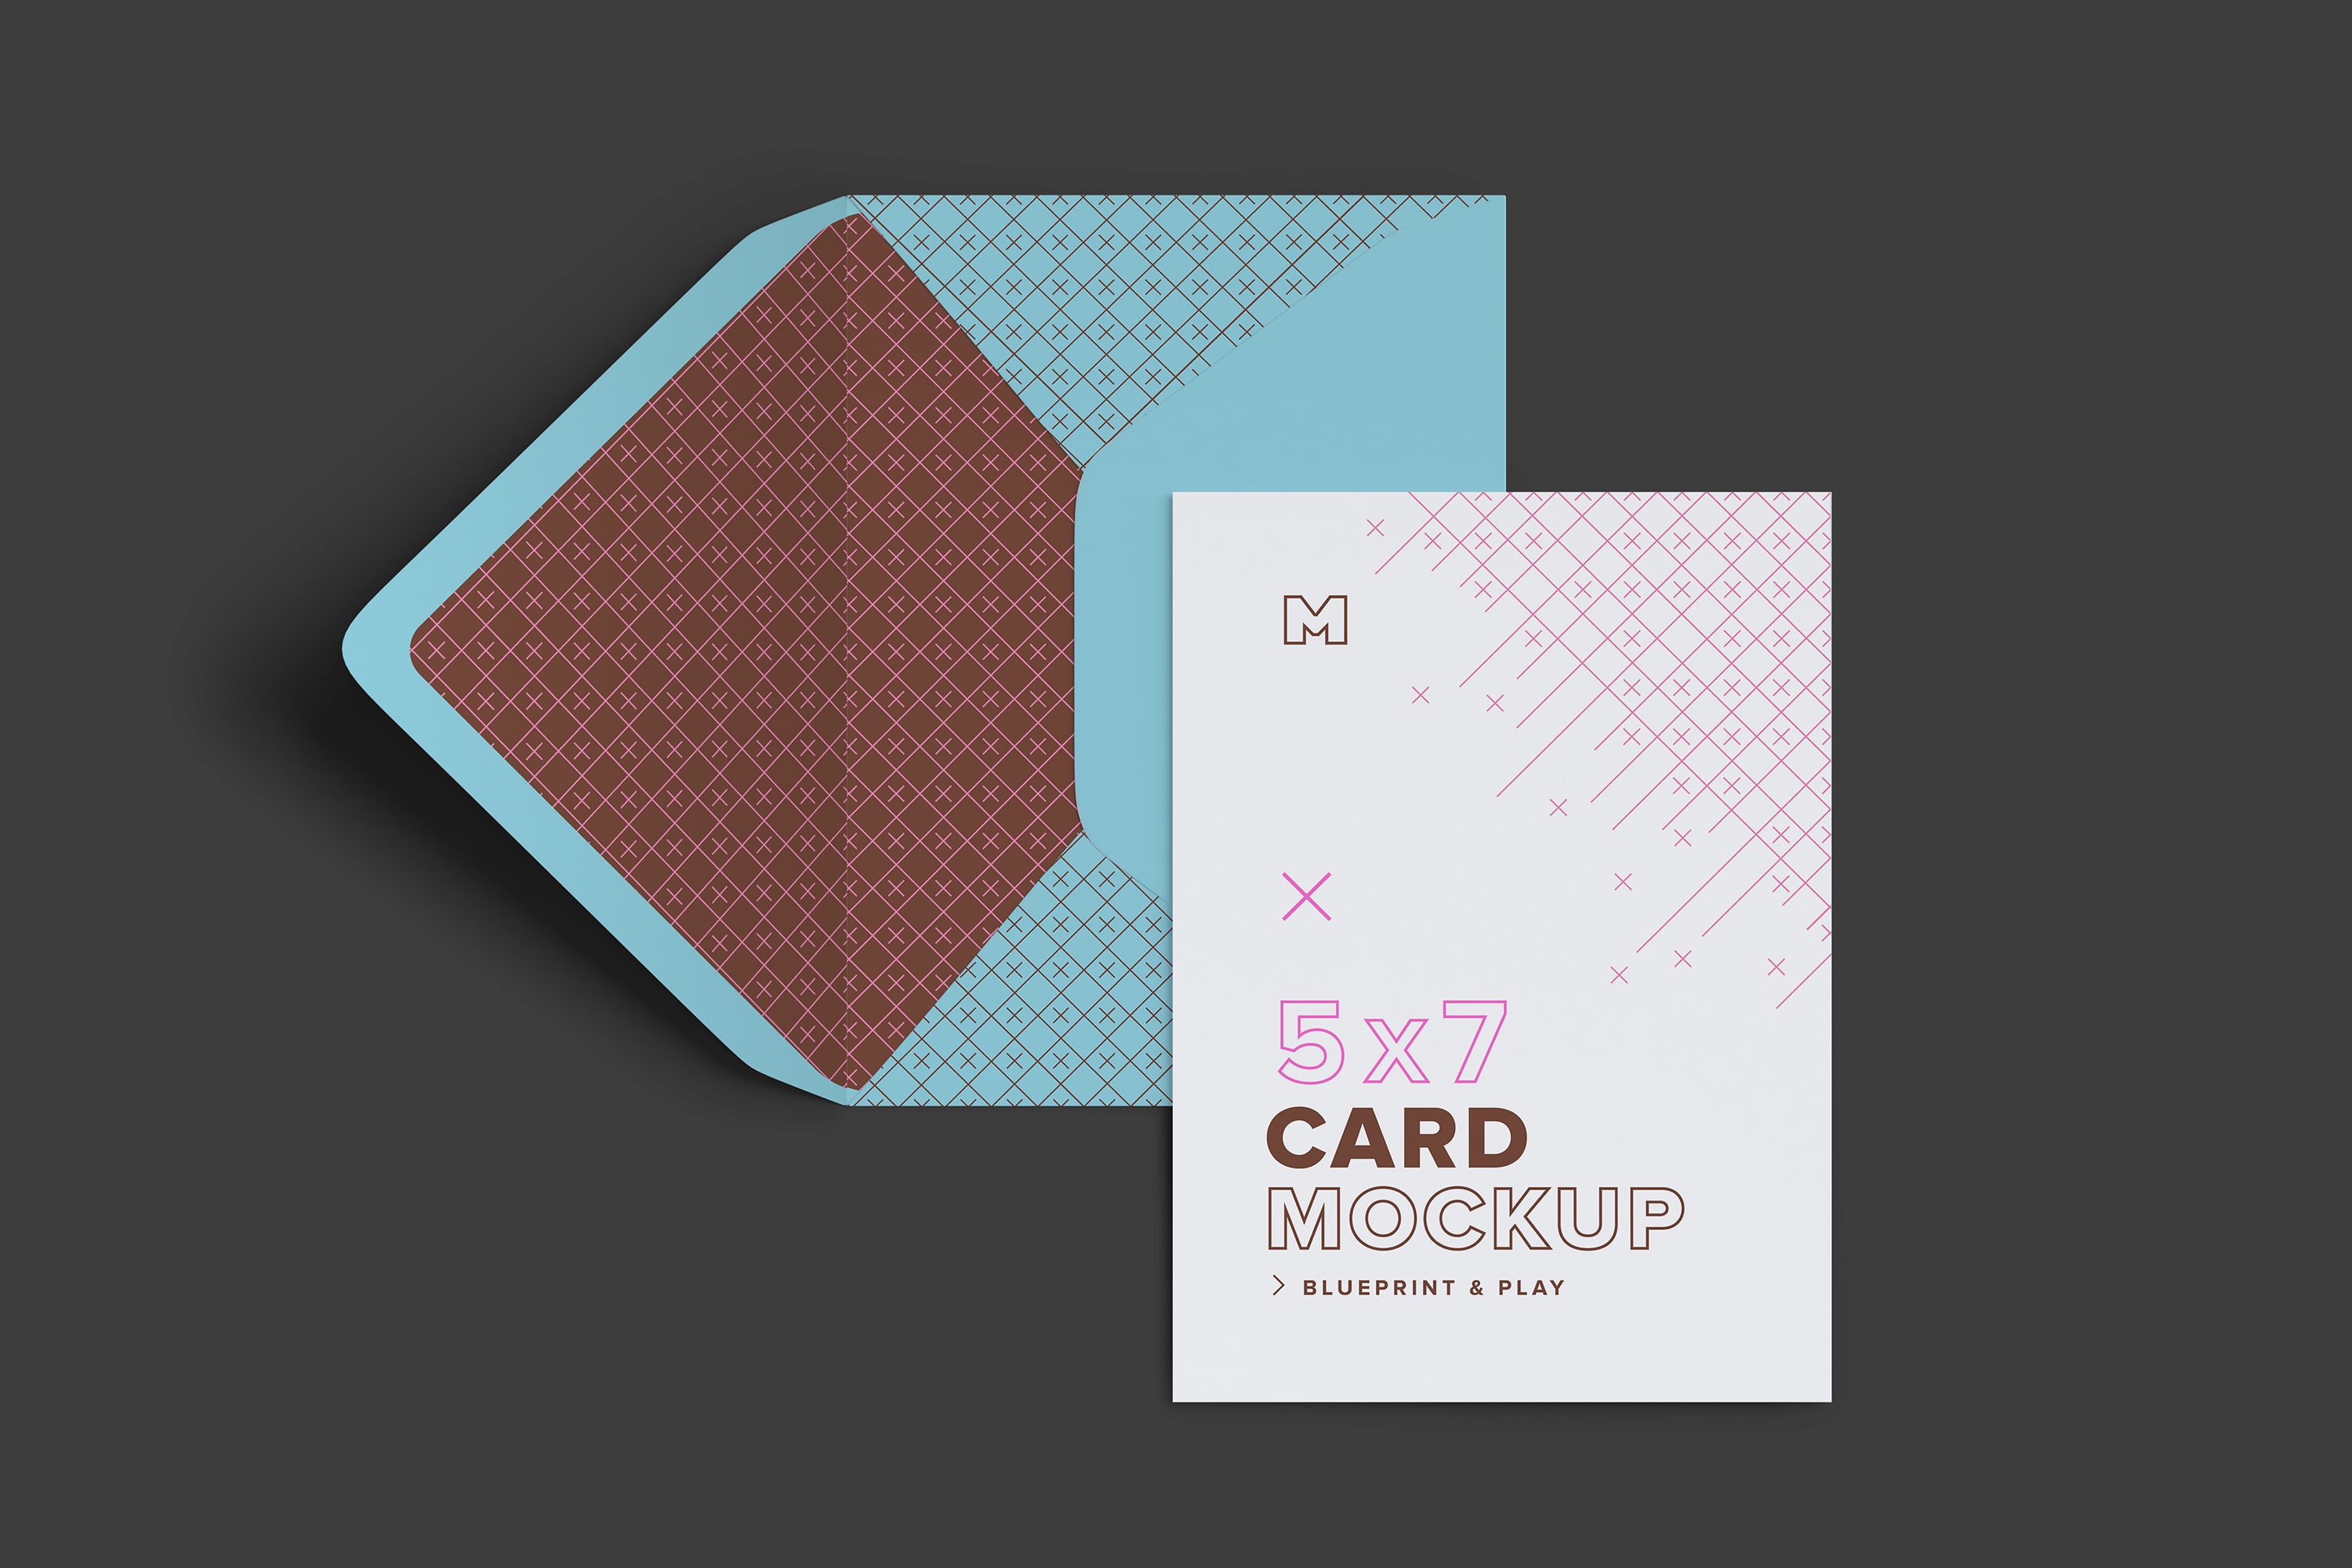 A7尺寸信封外观和贺卡设计图样机模板 A7 Envelope and Portrait Card Mockup插图(1)